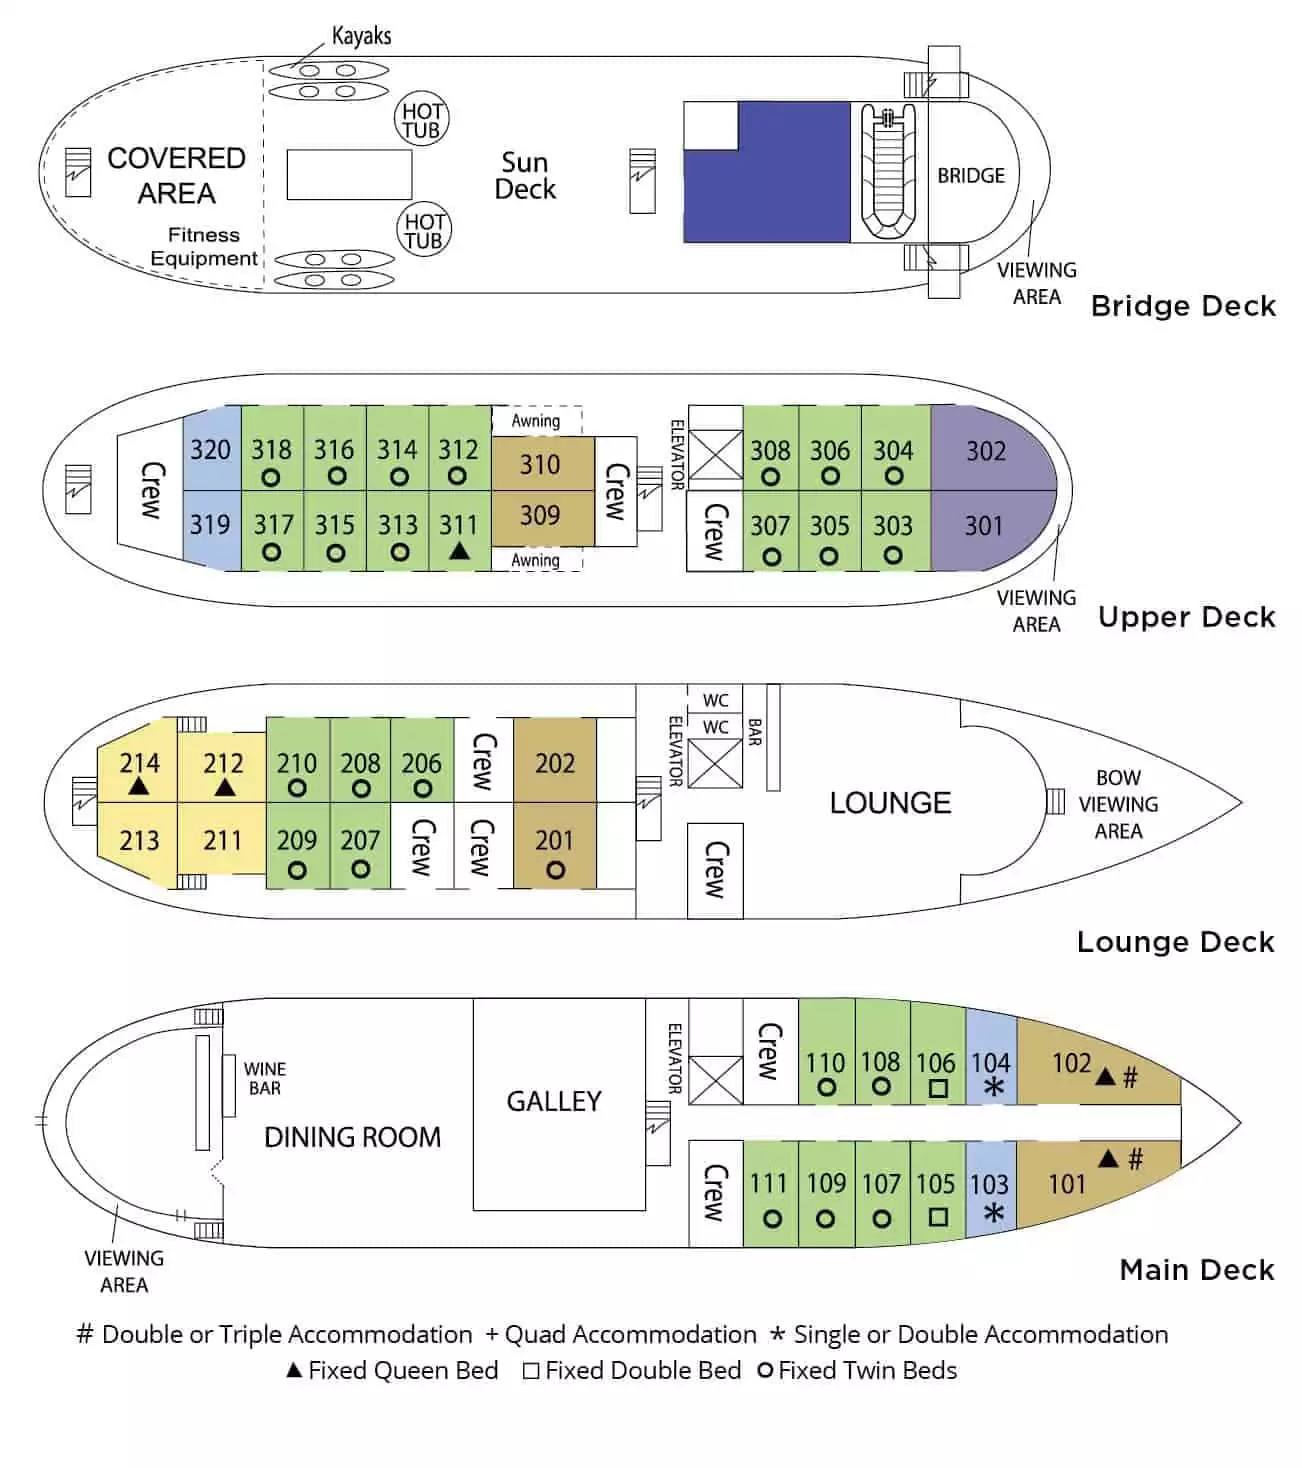 Deck plan detailing Main Deck, Lounge Deck, Upper Deck, Bridge Deck of 86-guest Wilderness Legacy expedition ship